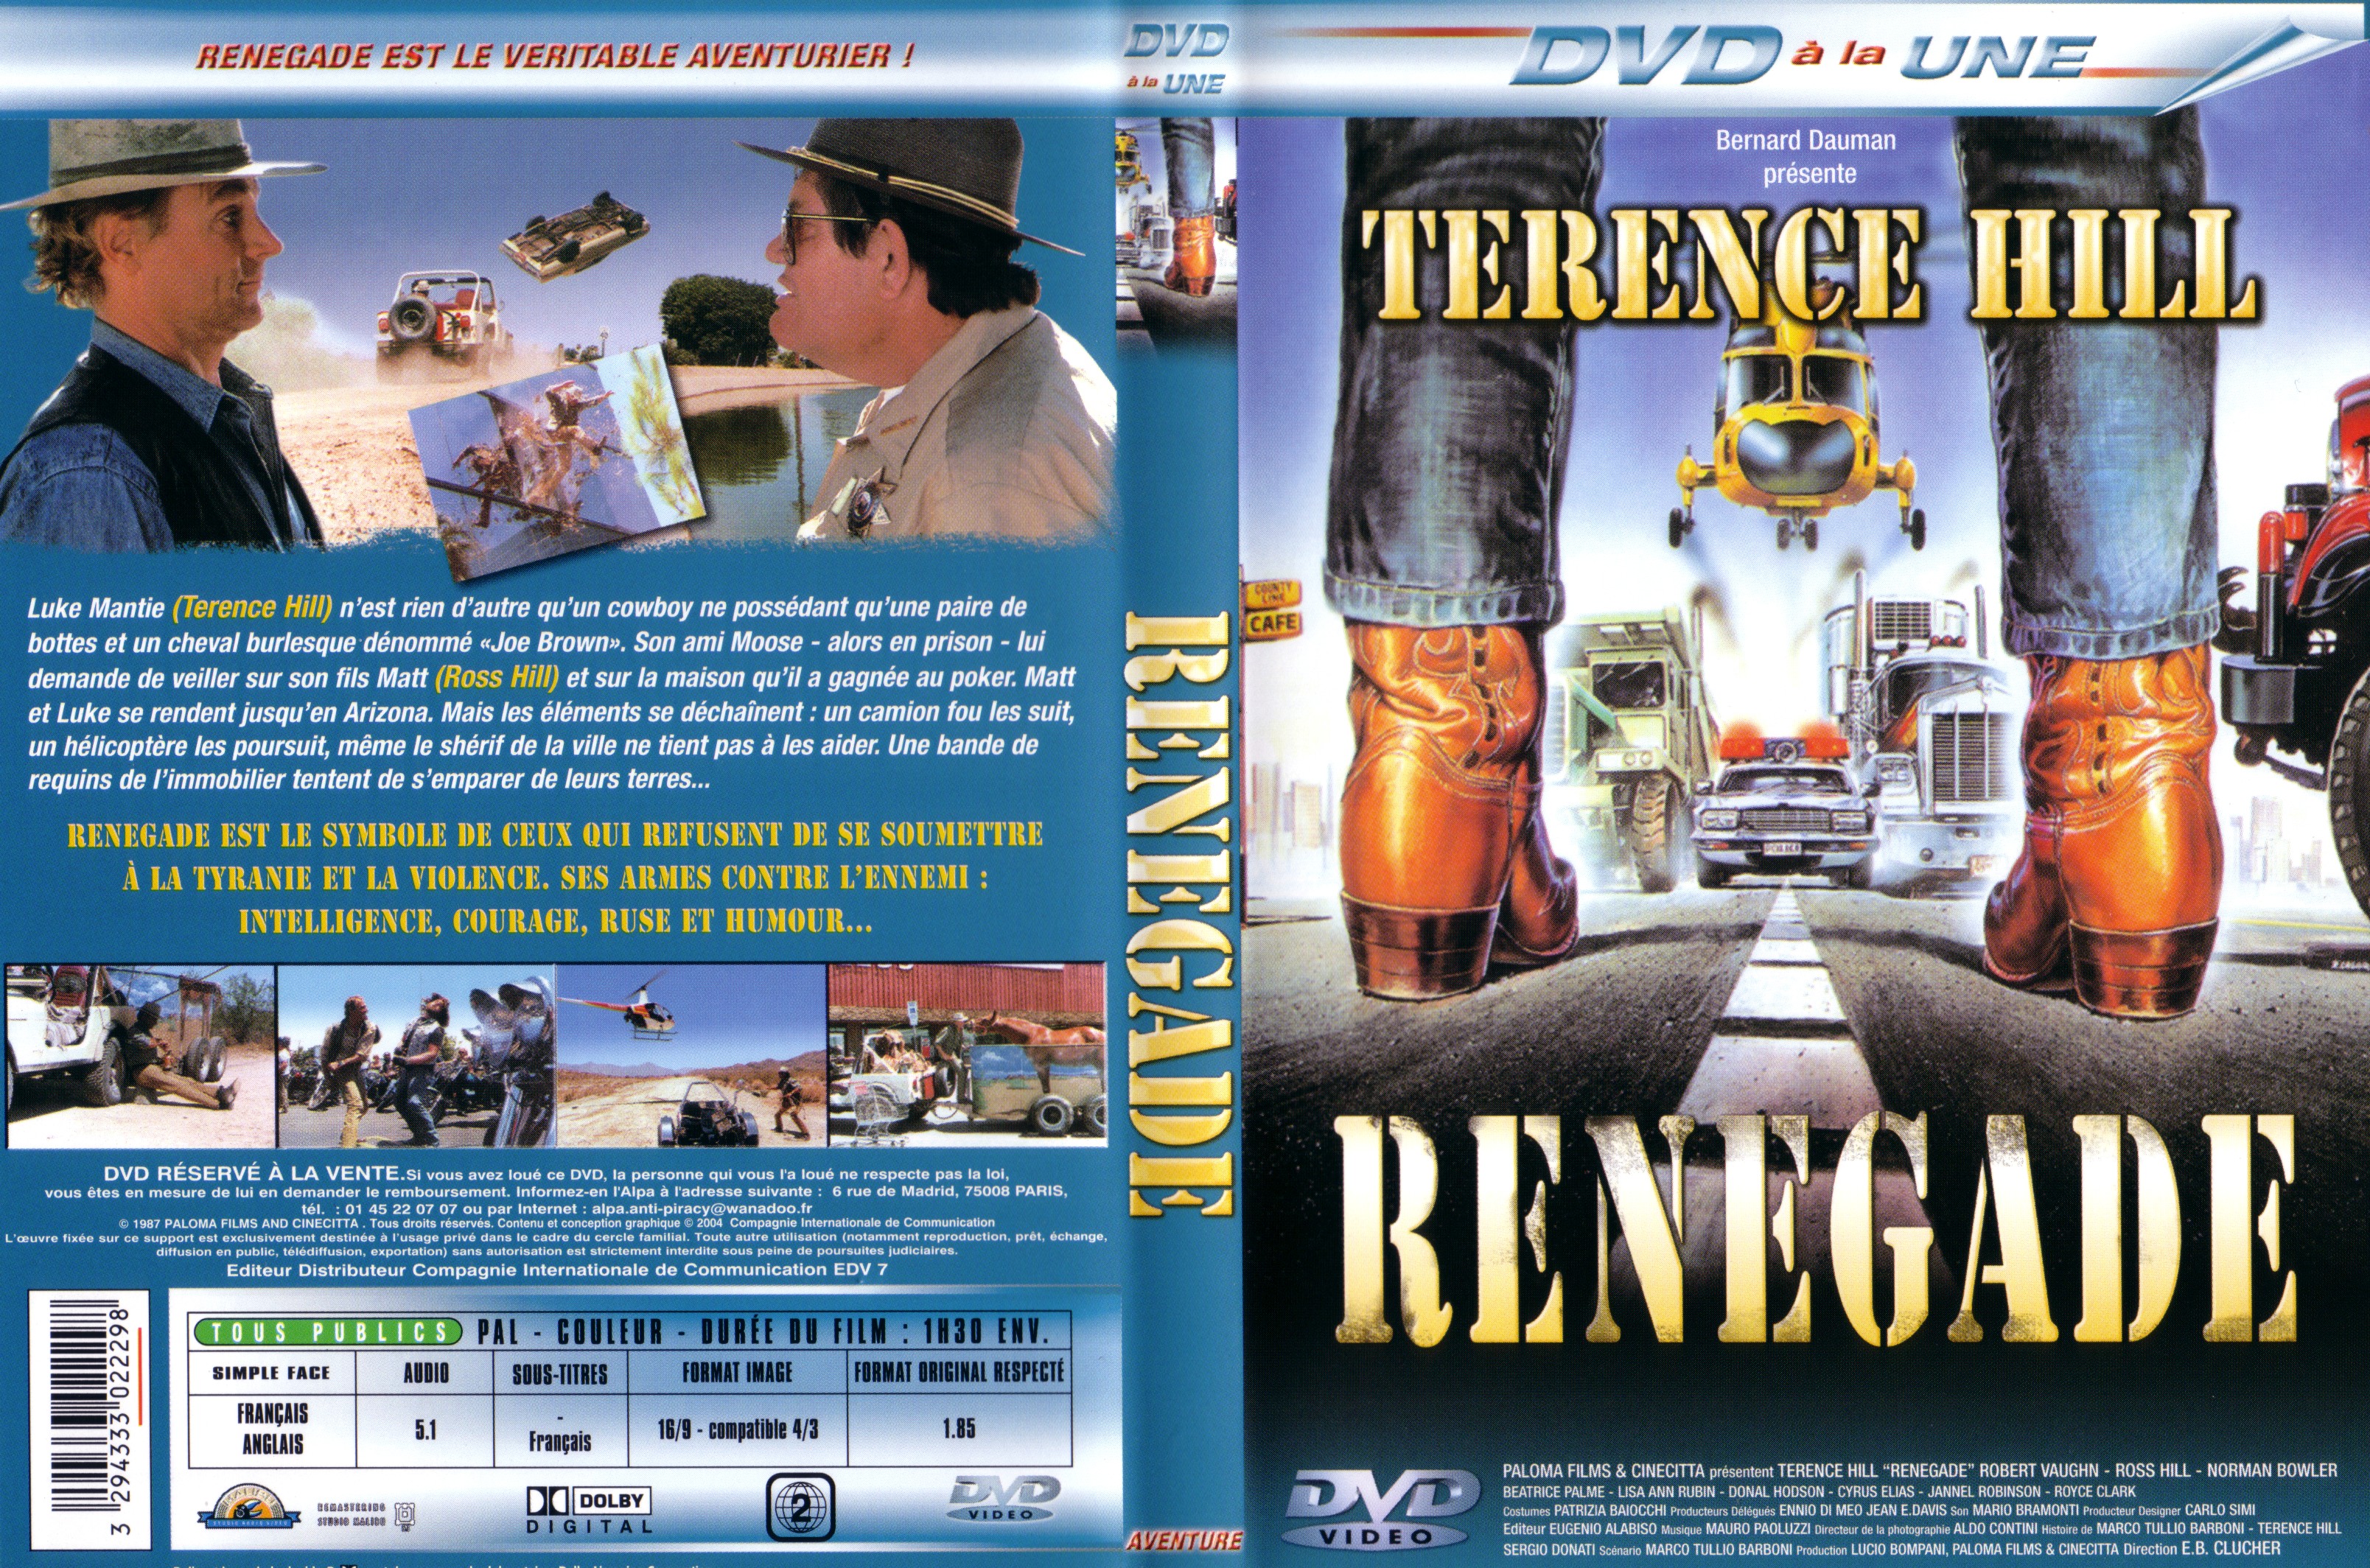 Jaquette DVD Renegade